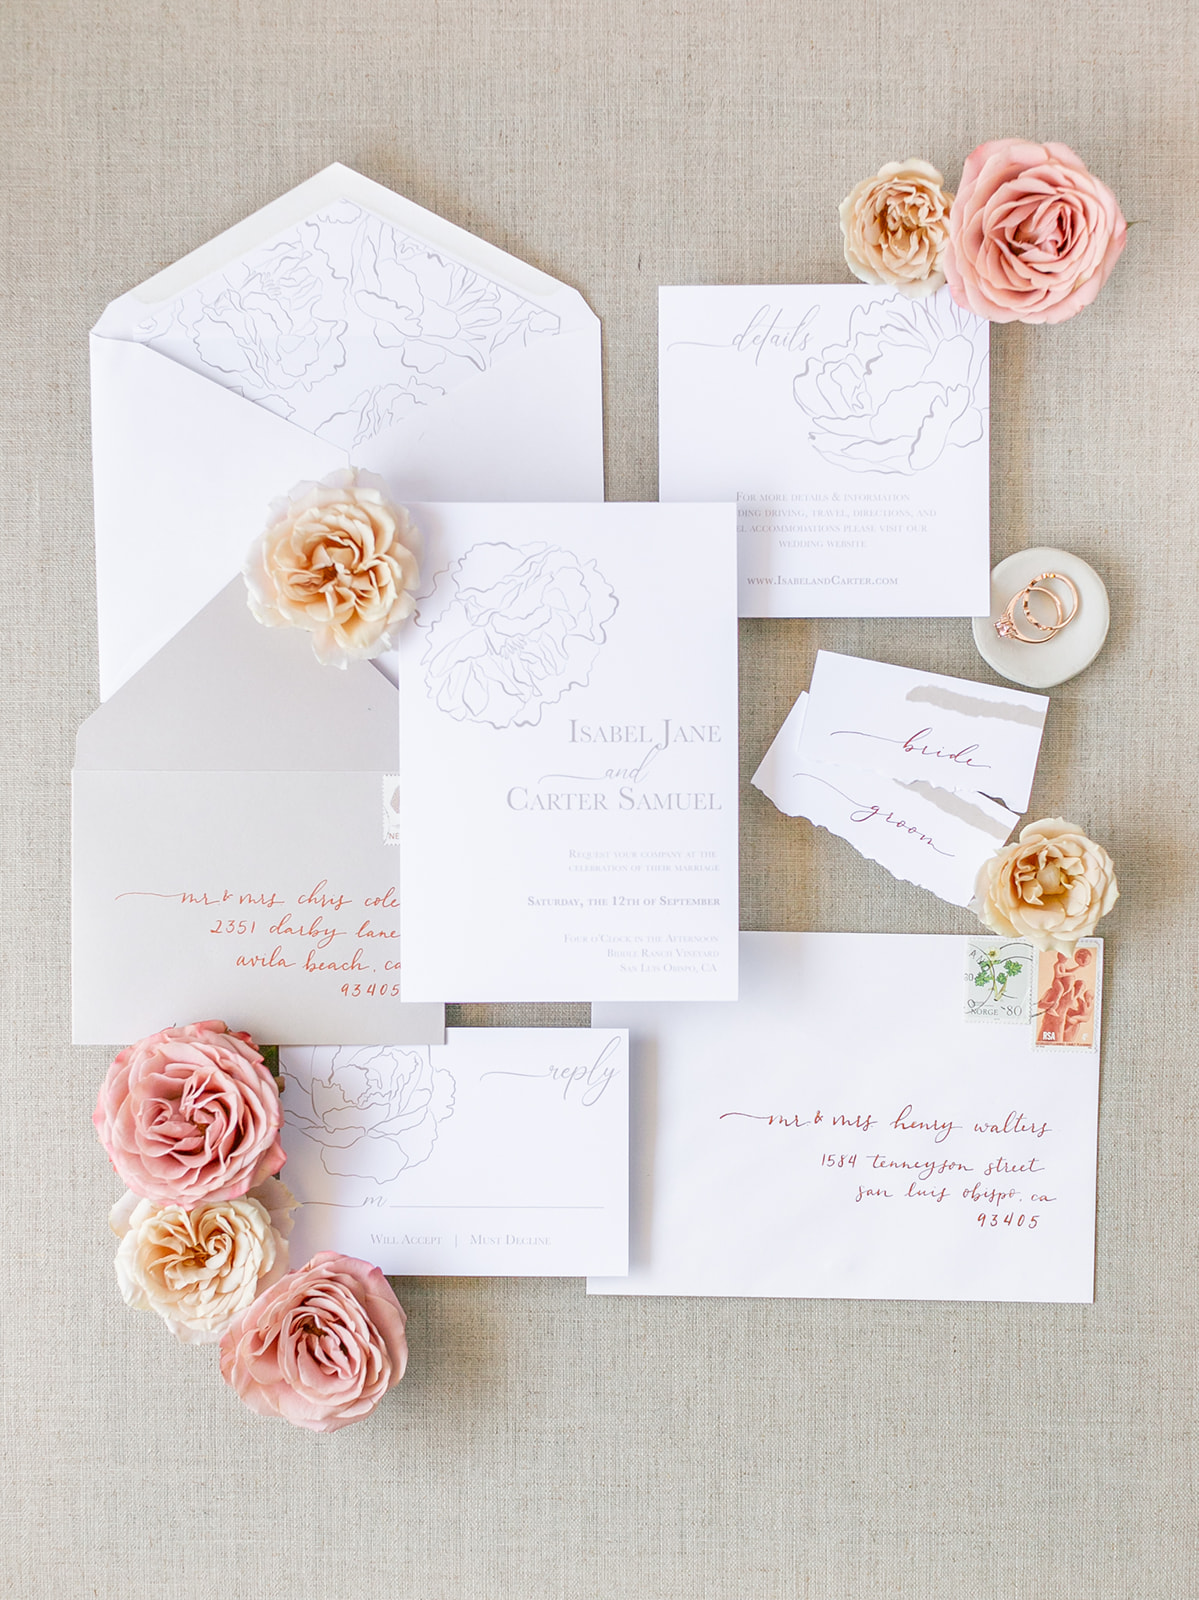 invitation, stationary, flowers, details